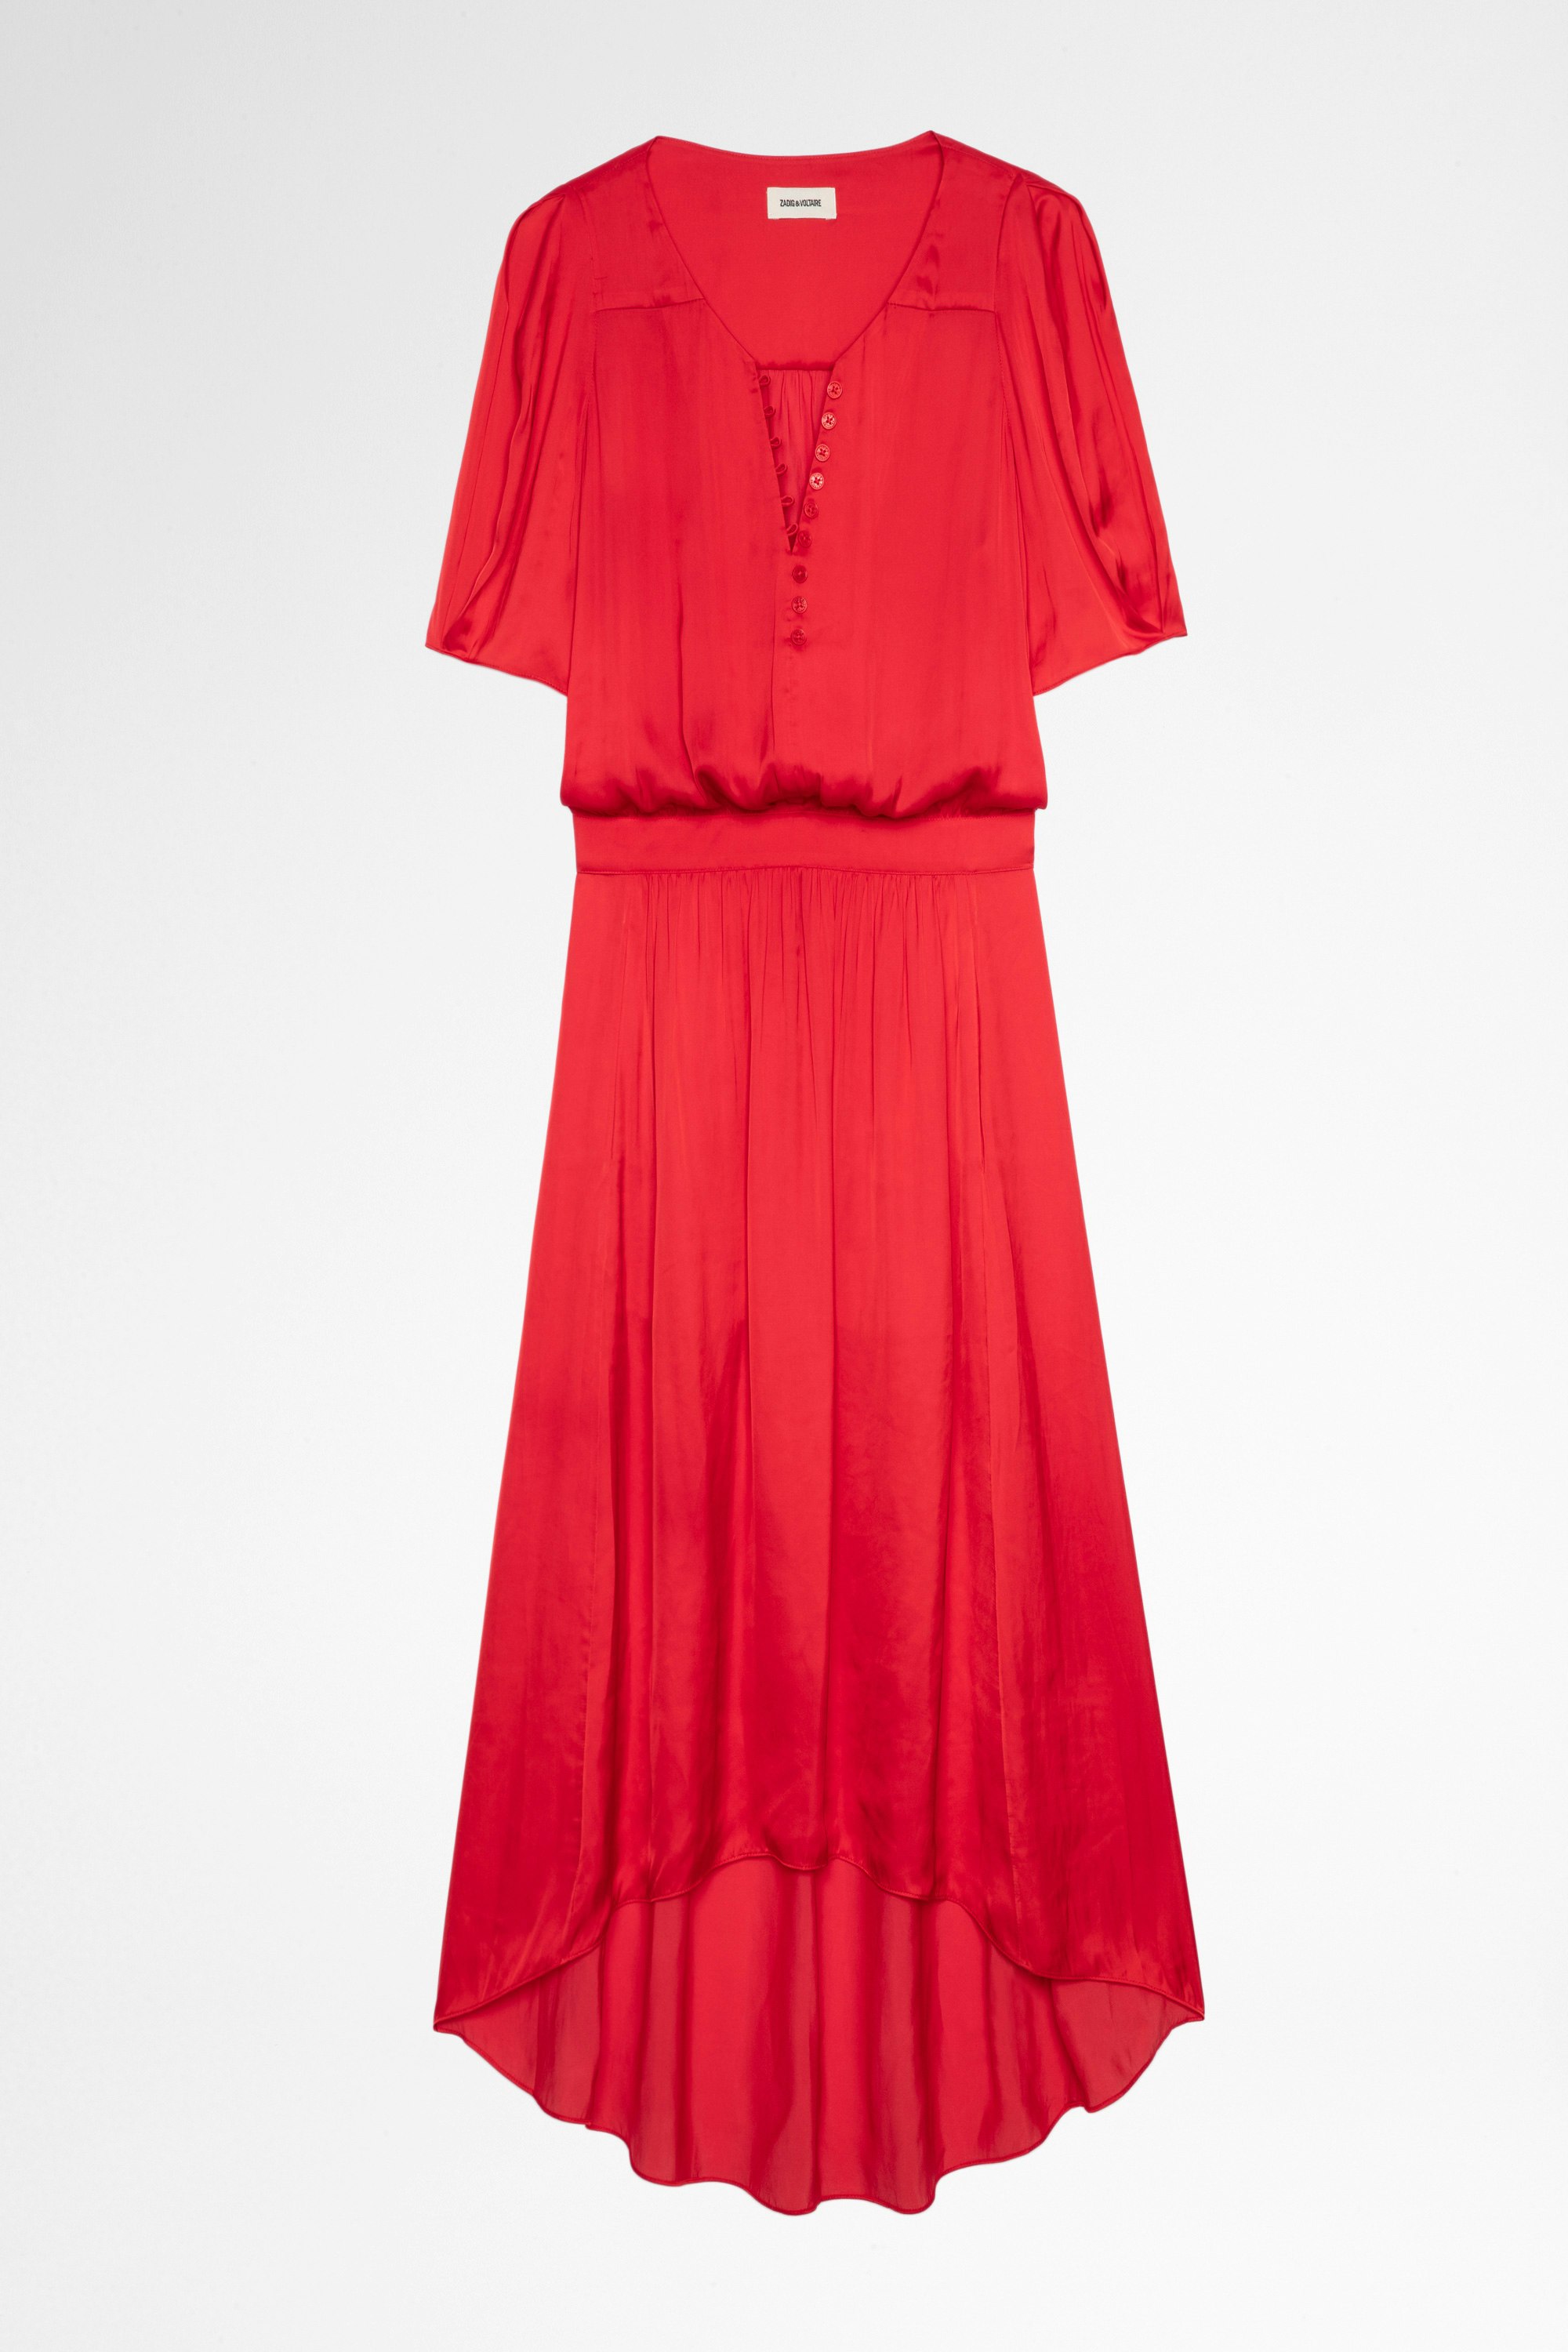 Ridge Satin Dress Women's asymmetrical dress in red satin